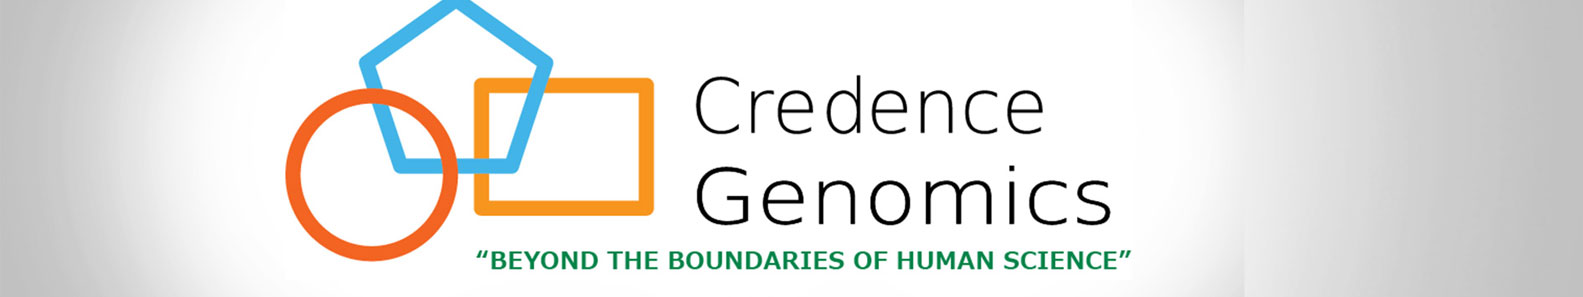 Credence Genomics